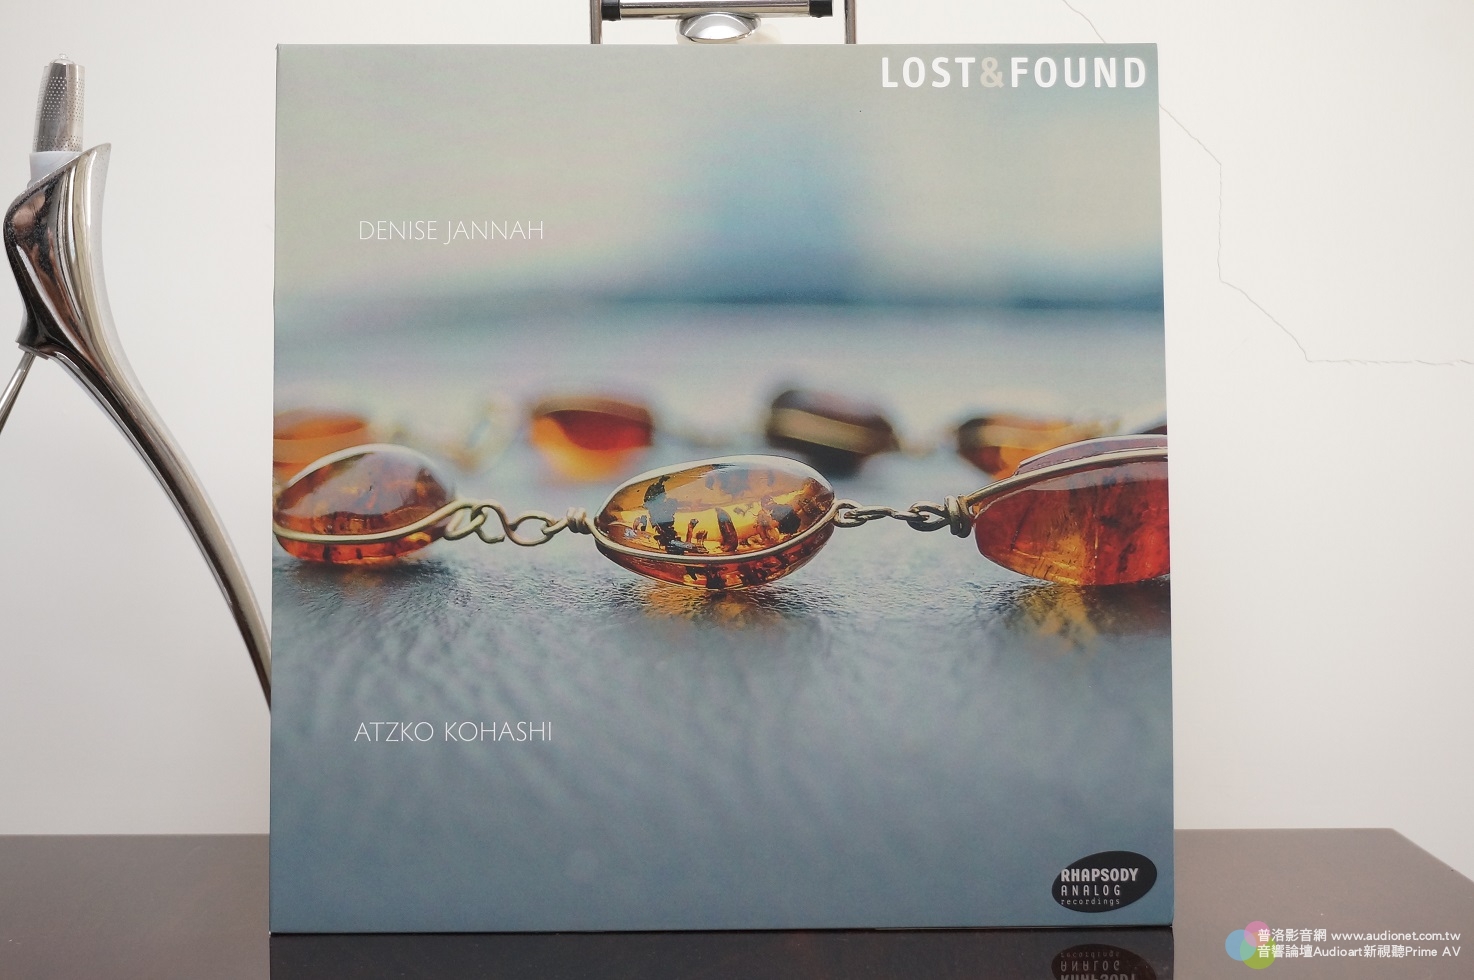 Lost and Found Denise Jannah與Atzko Kohashi失物招領，又一張迷人黑膠